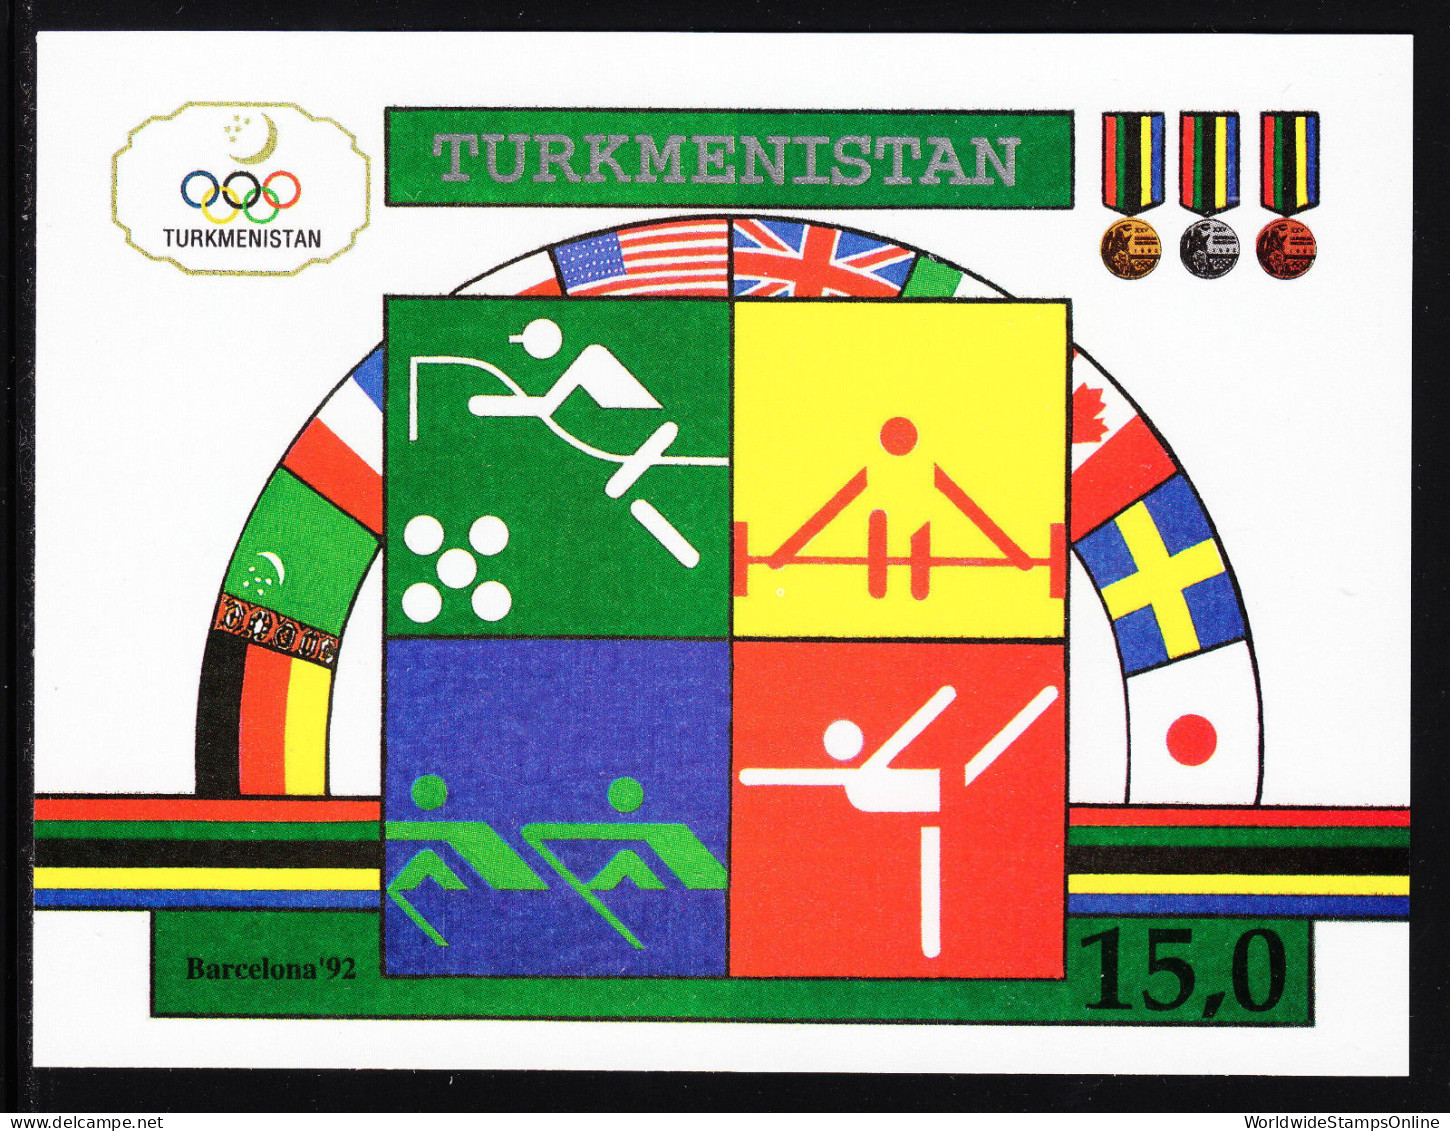 TURKMENISTAN — SCOTT 23 — 1992 15R OLYMPICS SHEET — MNH — SCV $11.00 - Turkmenistán